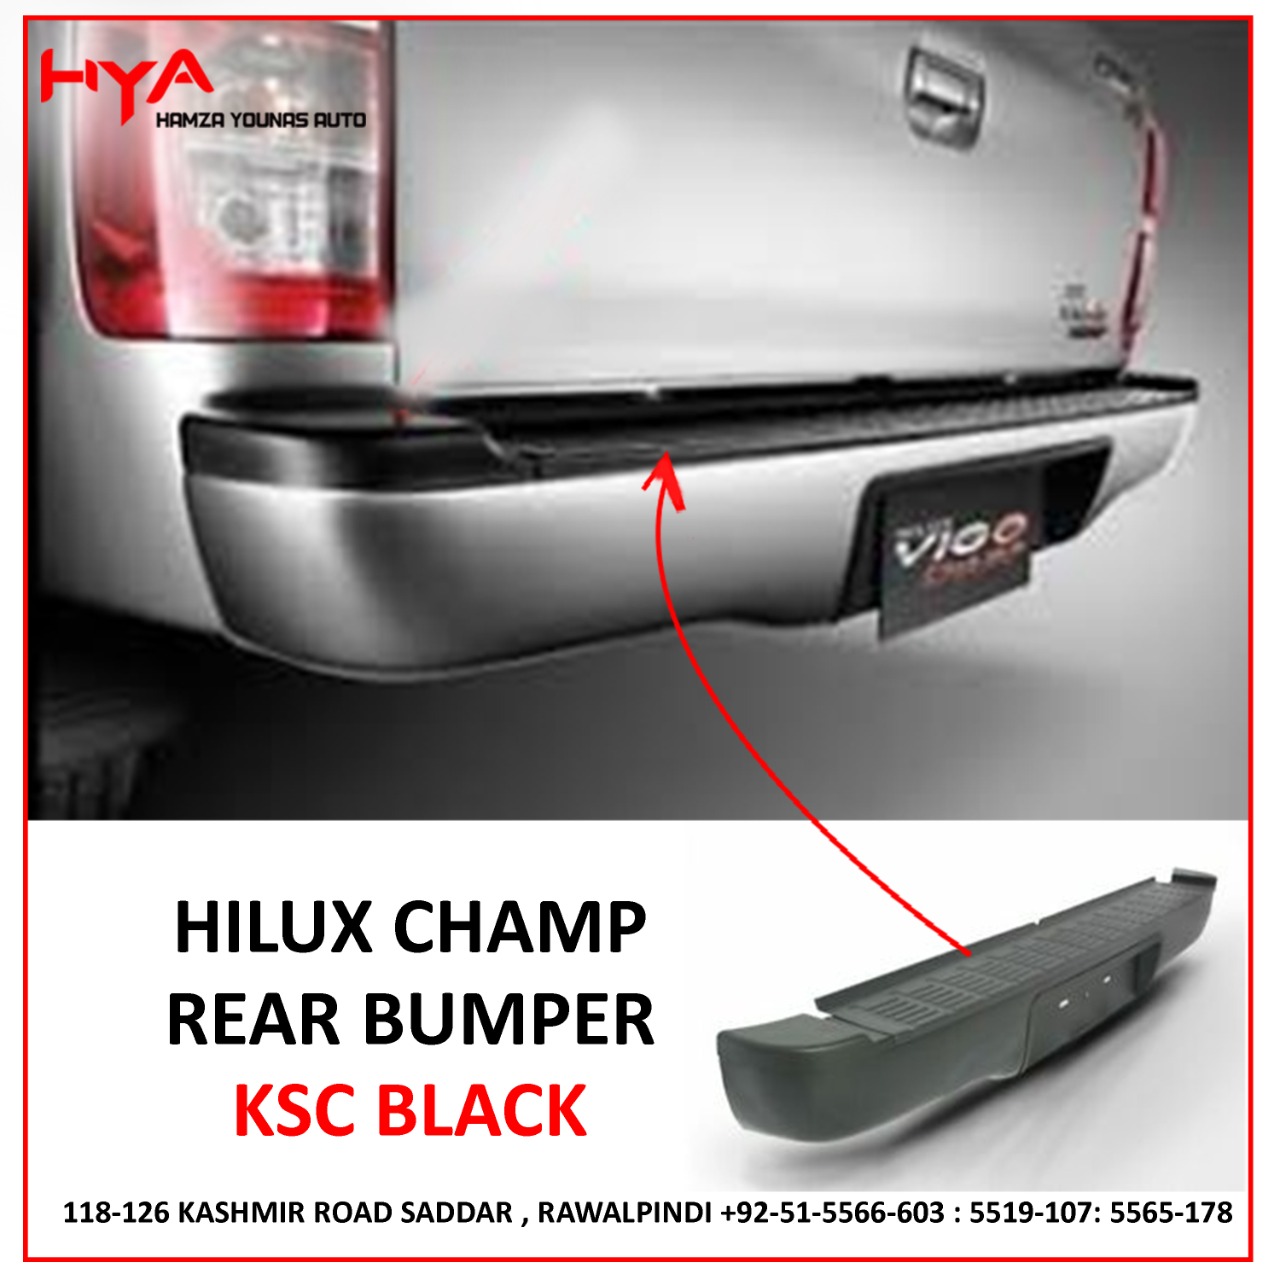 [RB KSC CHAMP B] REAR BUMPER HILUX CHAMP KSC (BLACK)